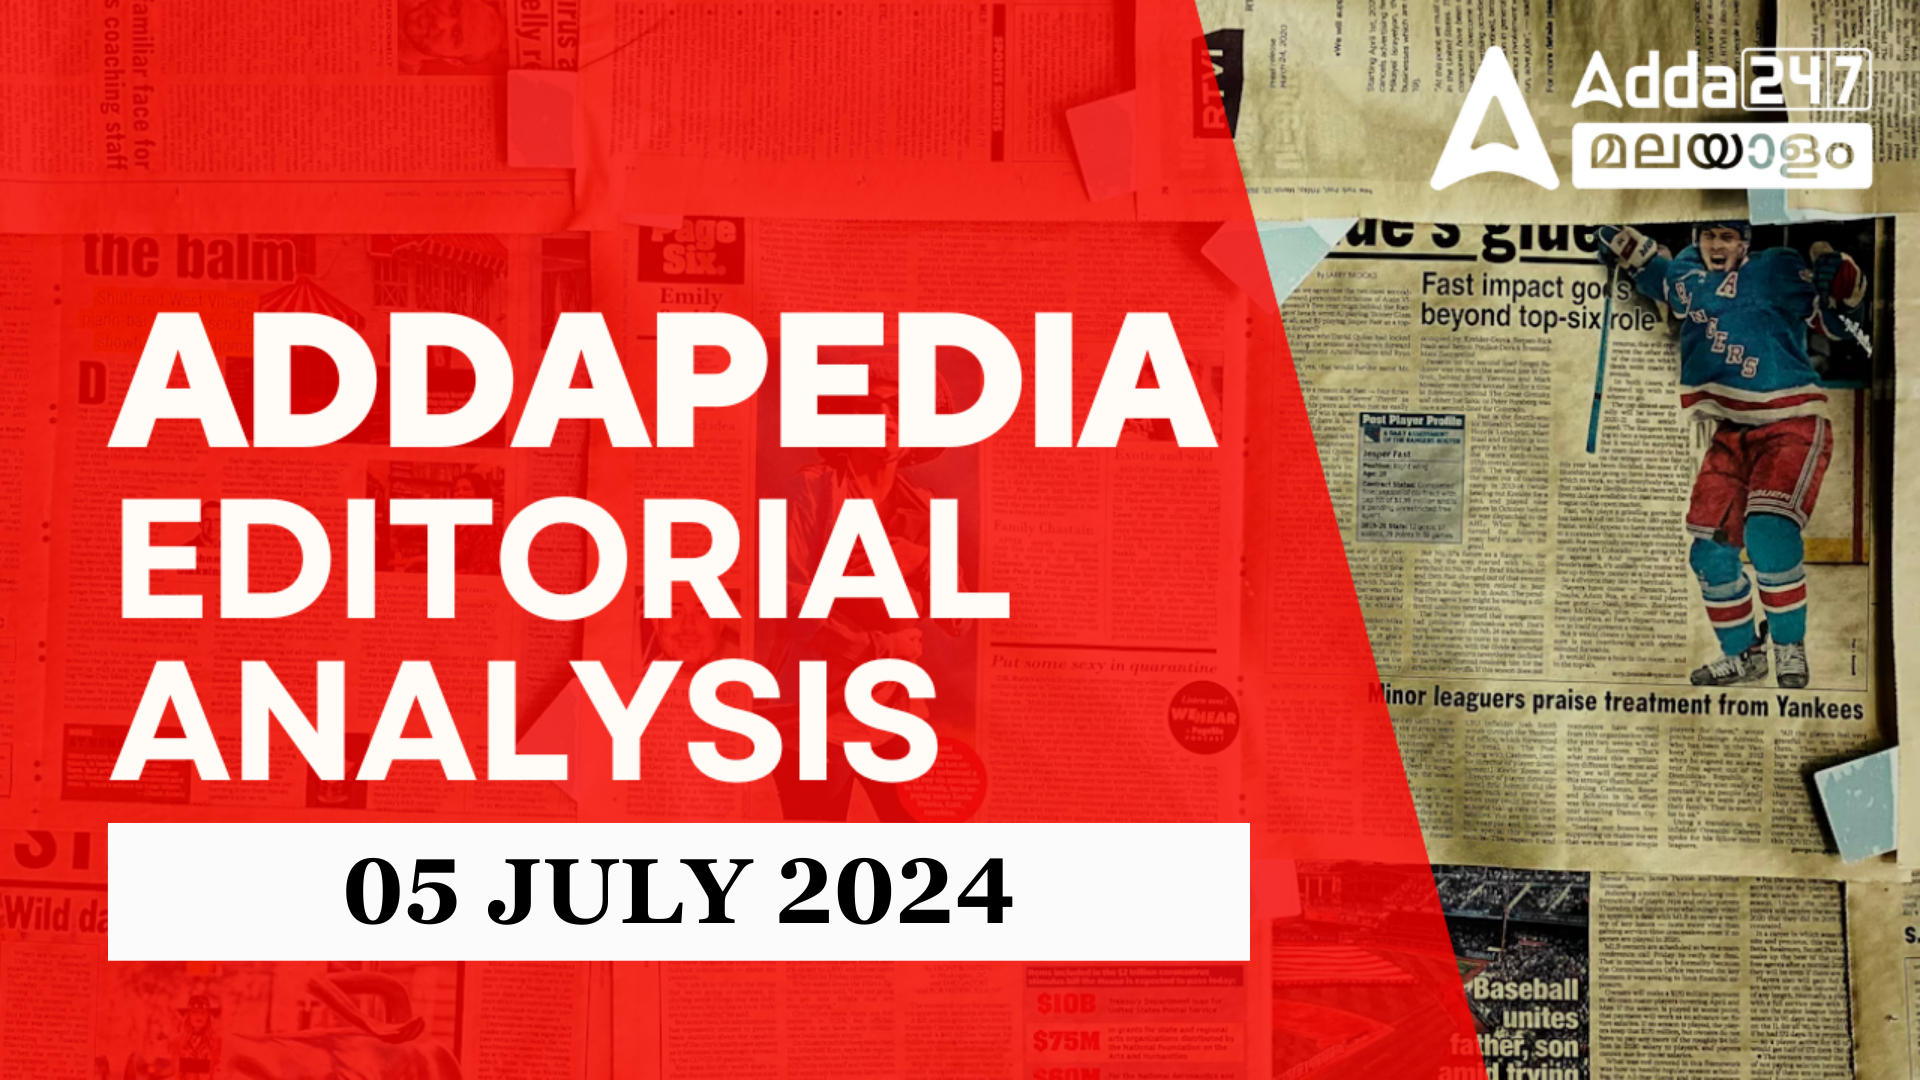 Addapedia Editorial Analysis: Daily News Editorial PDF, 05 July 2024